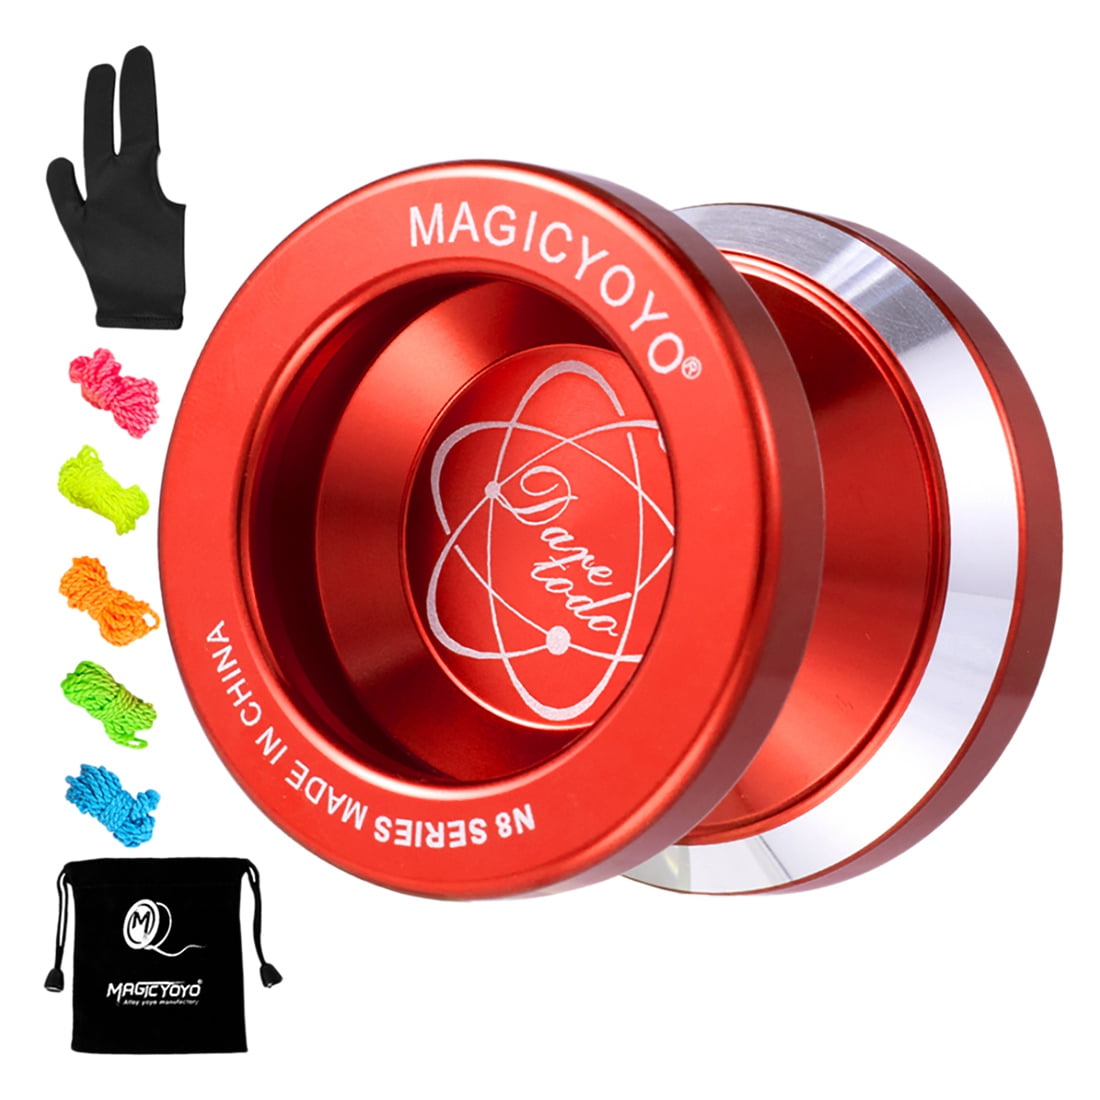 MAGICYOYO N8 Metal for Kids,5 Strings,Glove Walmart.com